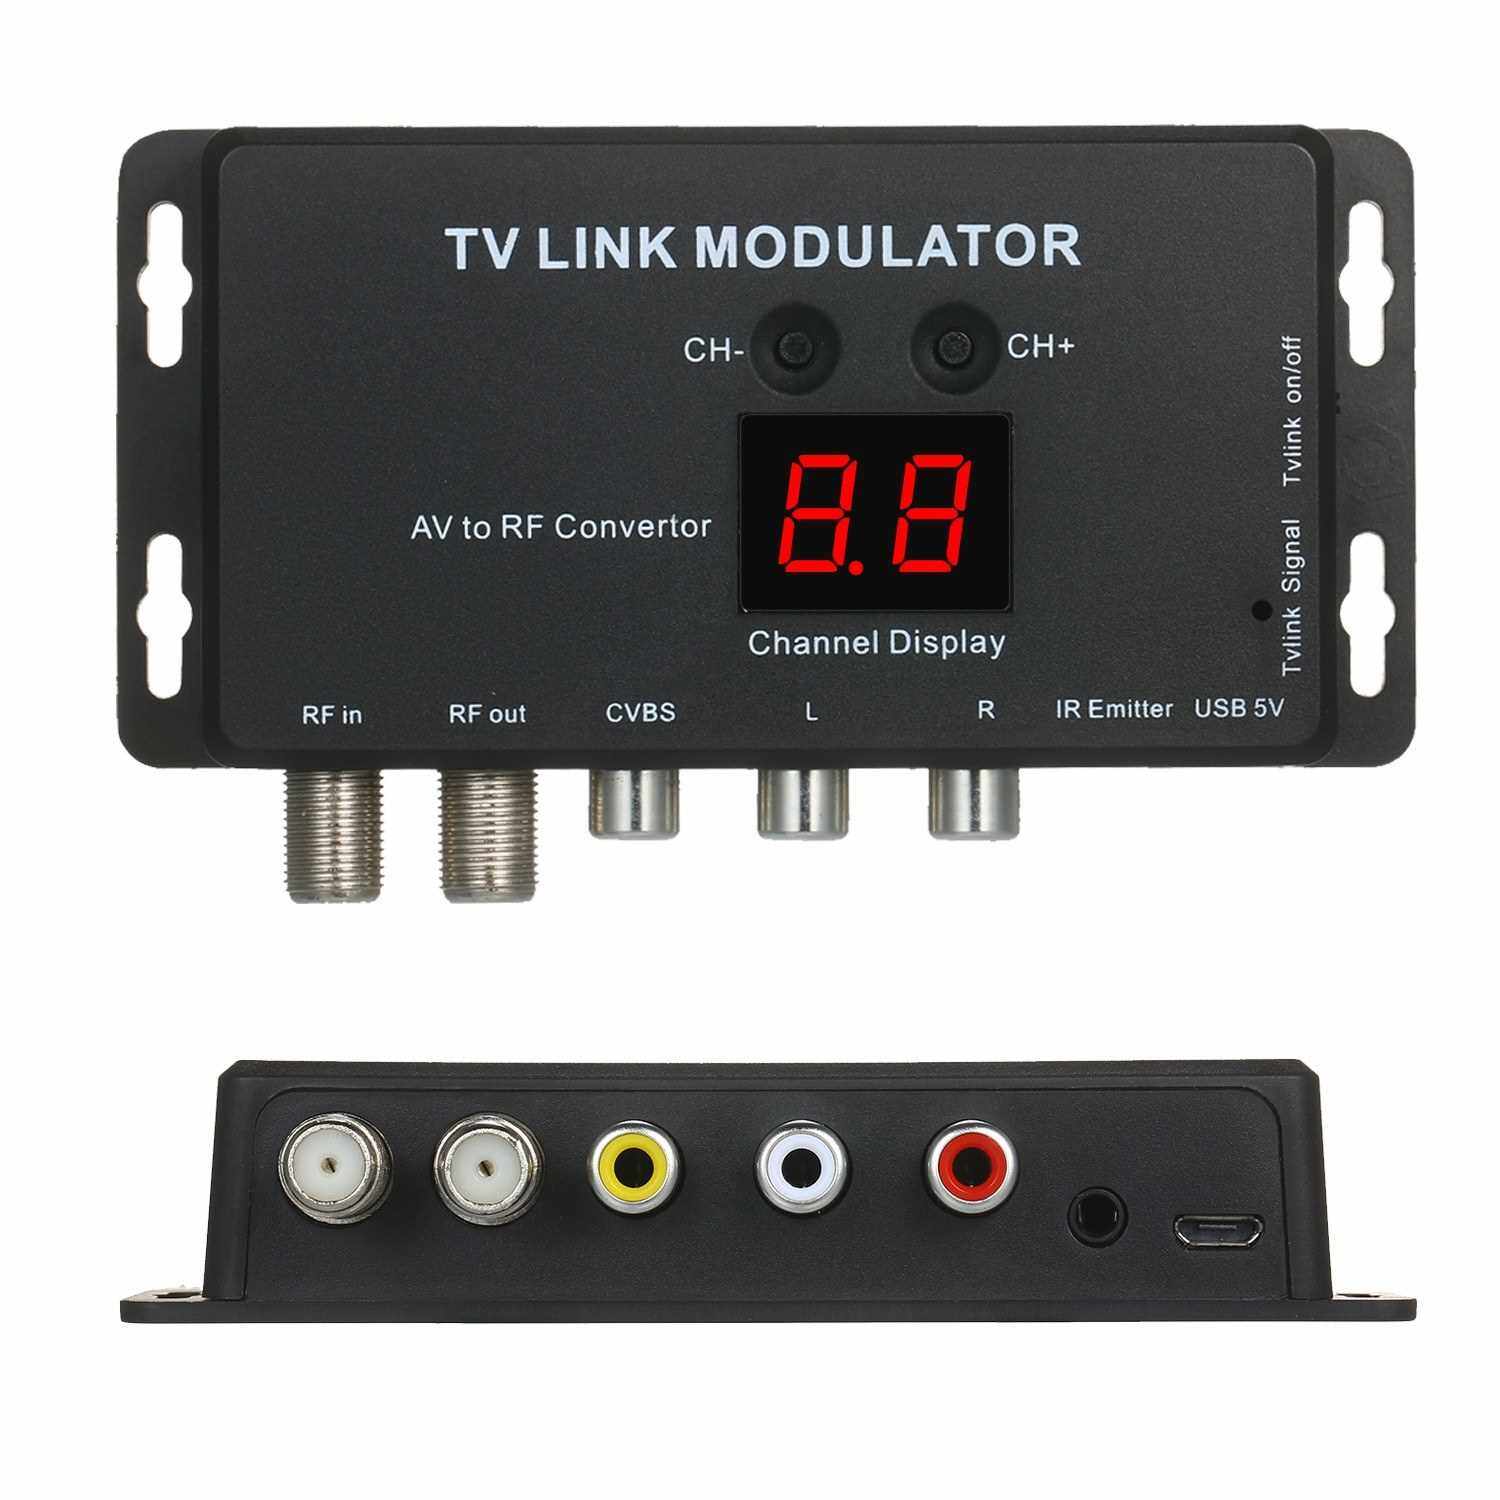 TVLINK Modulator AV to RF Convertor & IR Extender RF Modulator (Standard)